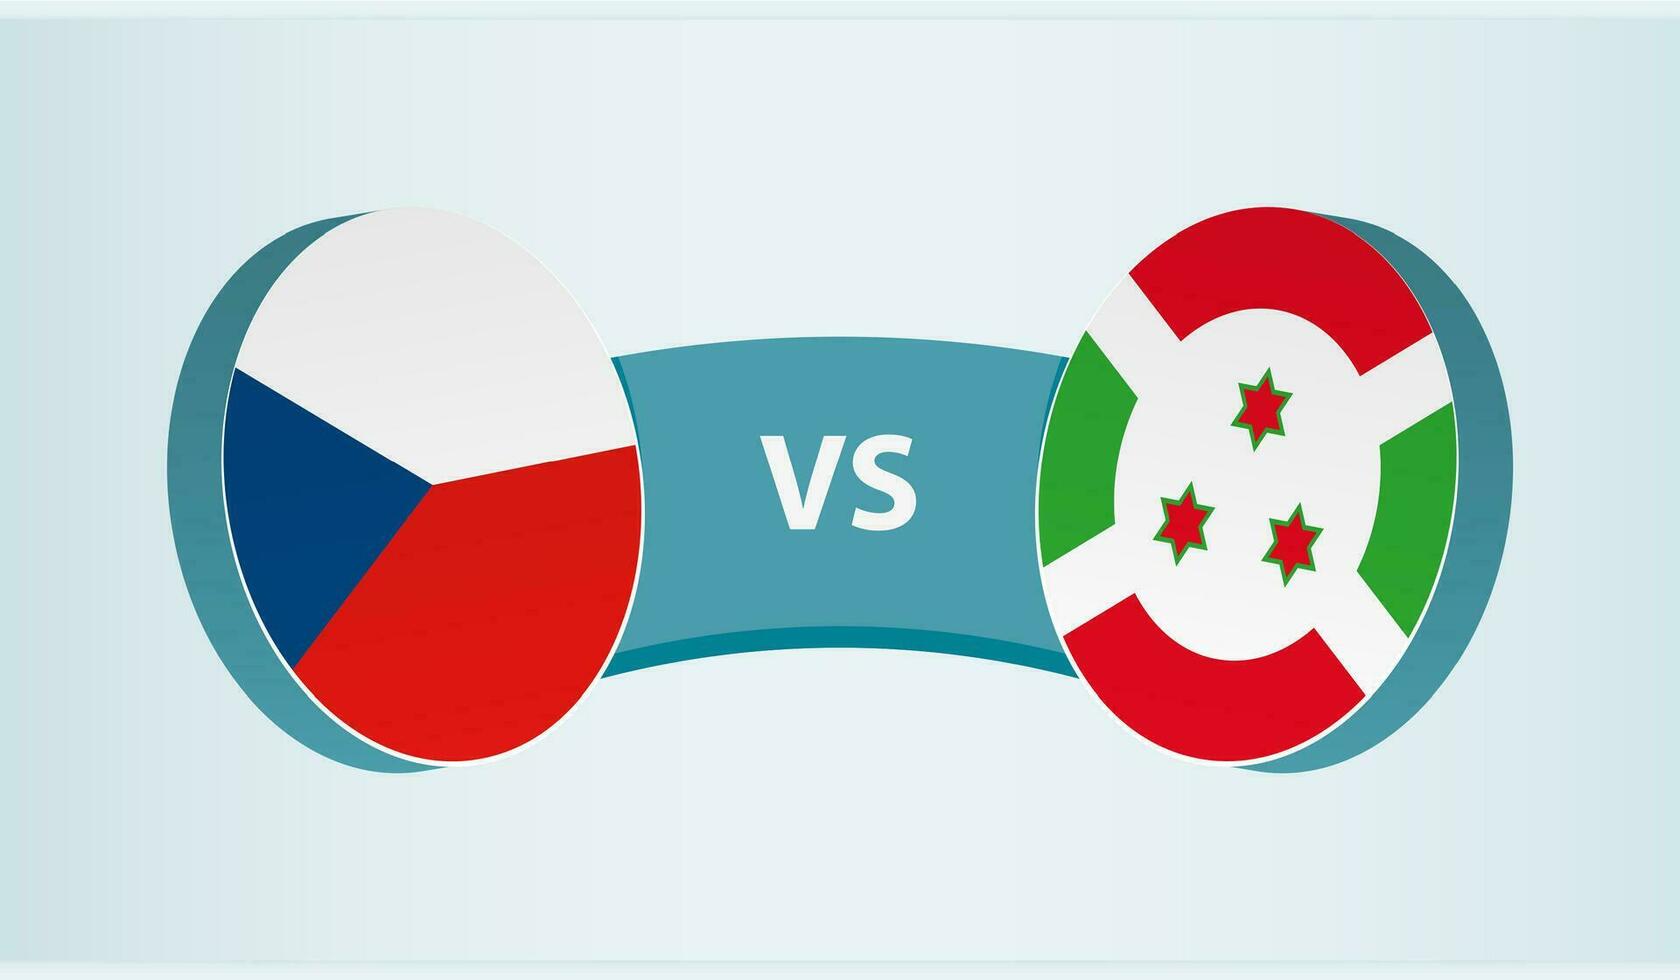 Czech Republic versus Burundi, team sports competition concept. vector